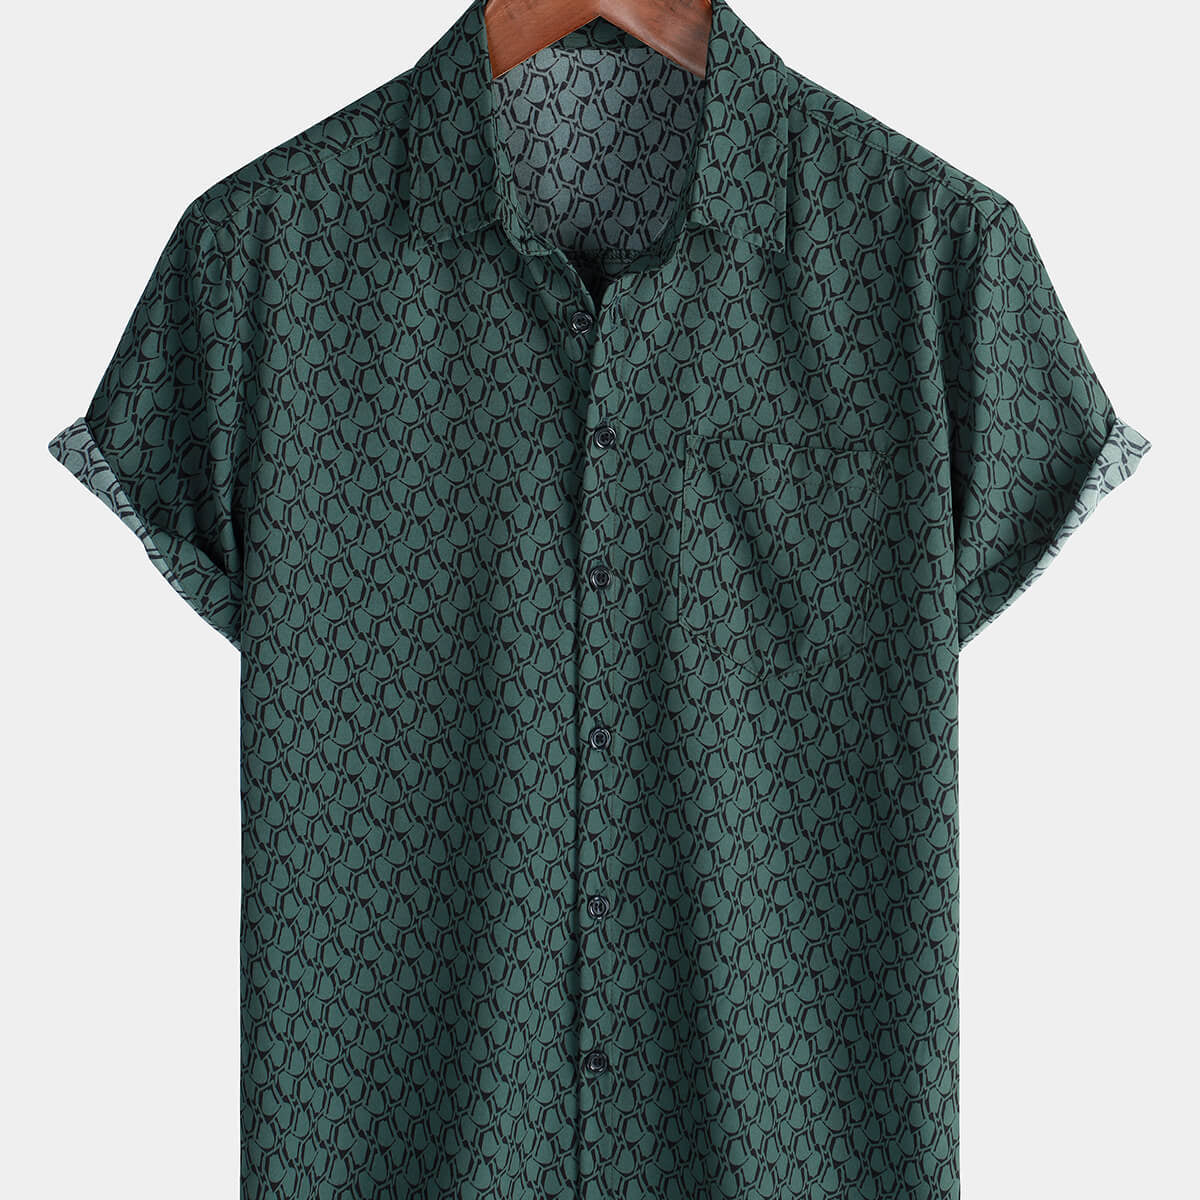 Men's Casual Holiday Short Sleeve Green Button Up Shirt